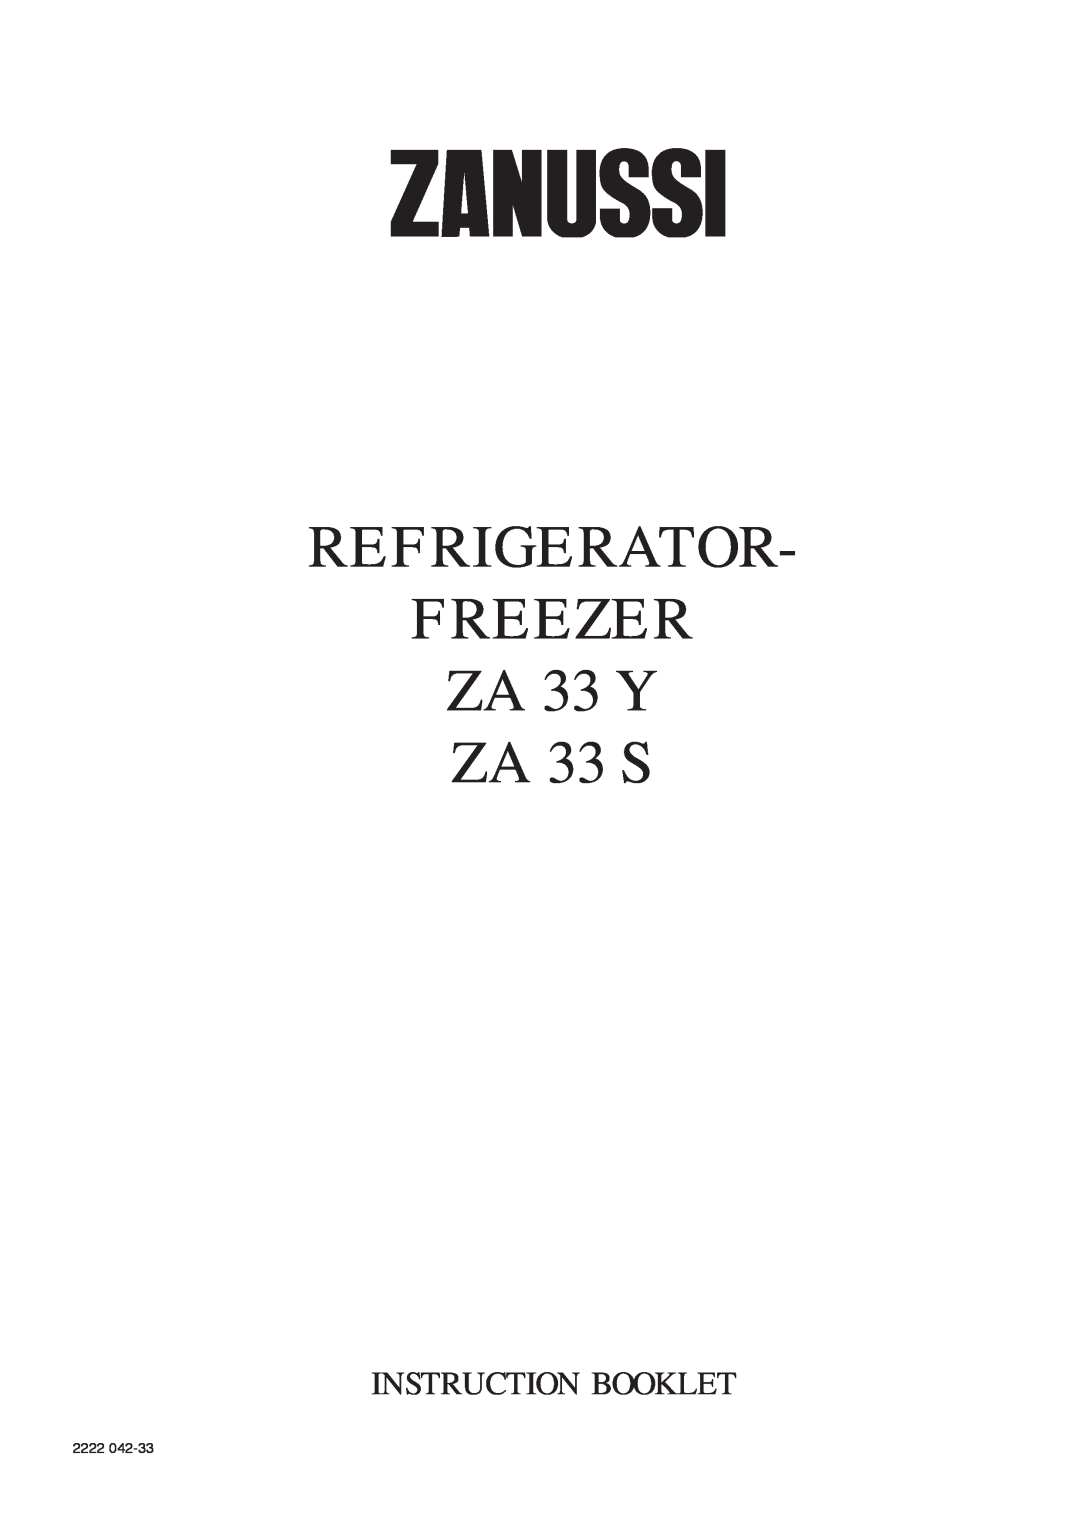 Zanussi manual REFRIGERATOR FREEZER ZA 33 Y ZA 33 S, Instruction Booklet, 2222 